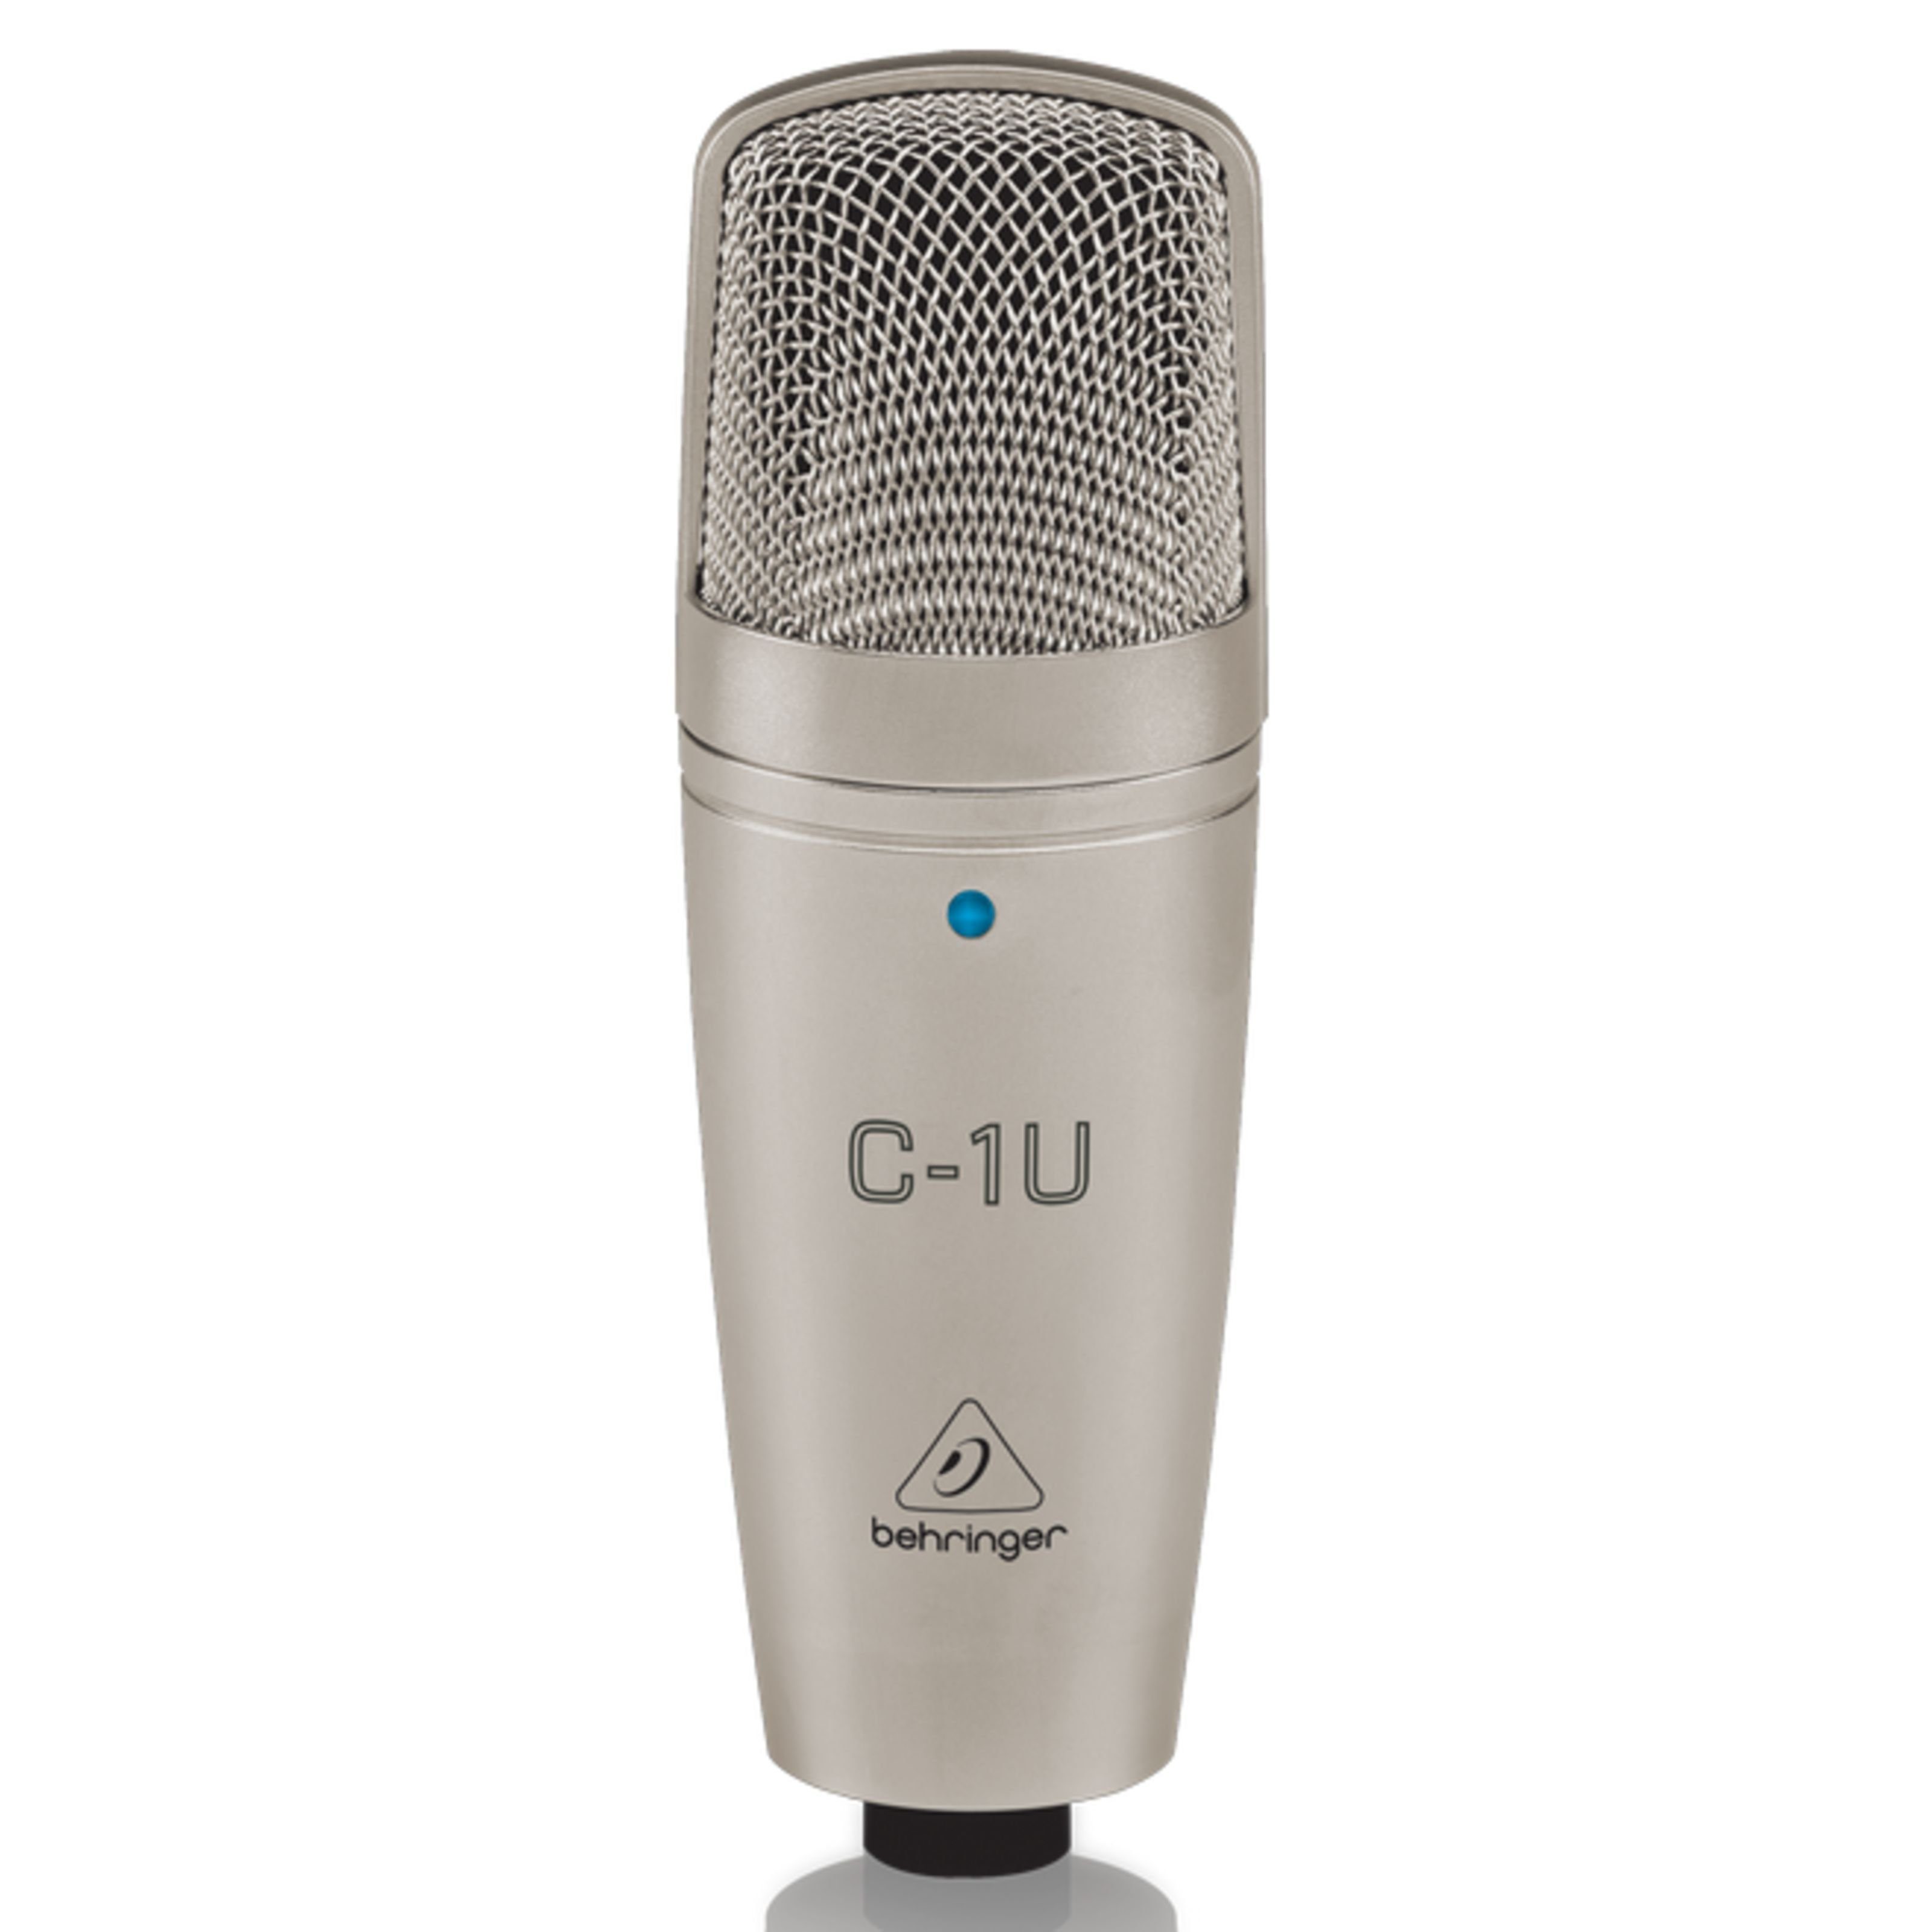 Behringer Mikrofon (C-1U USB Kondensatormikrofon), C-1U - USB Mikrofon